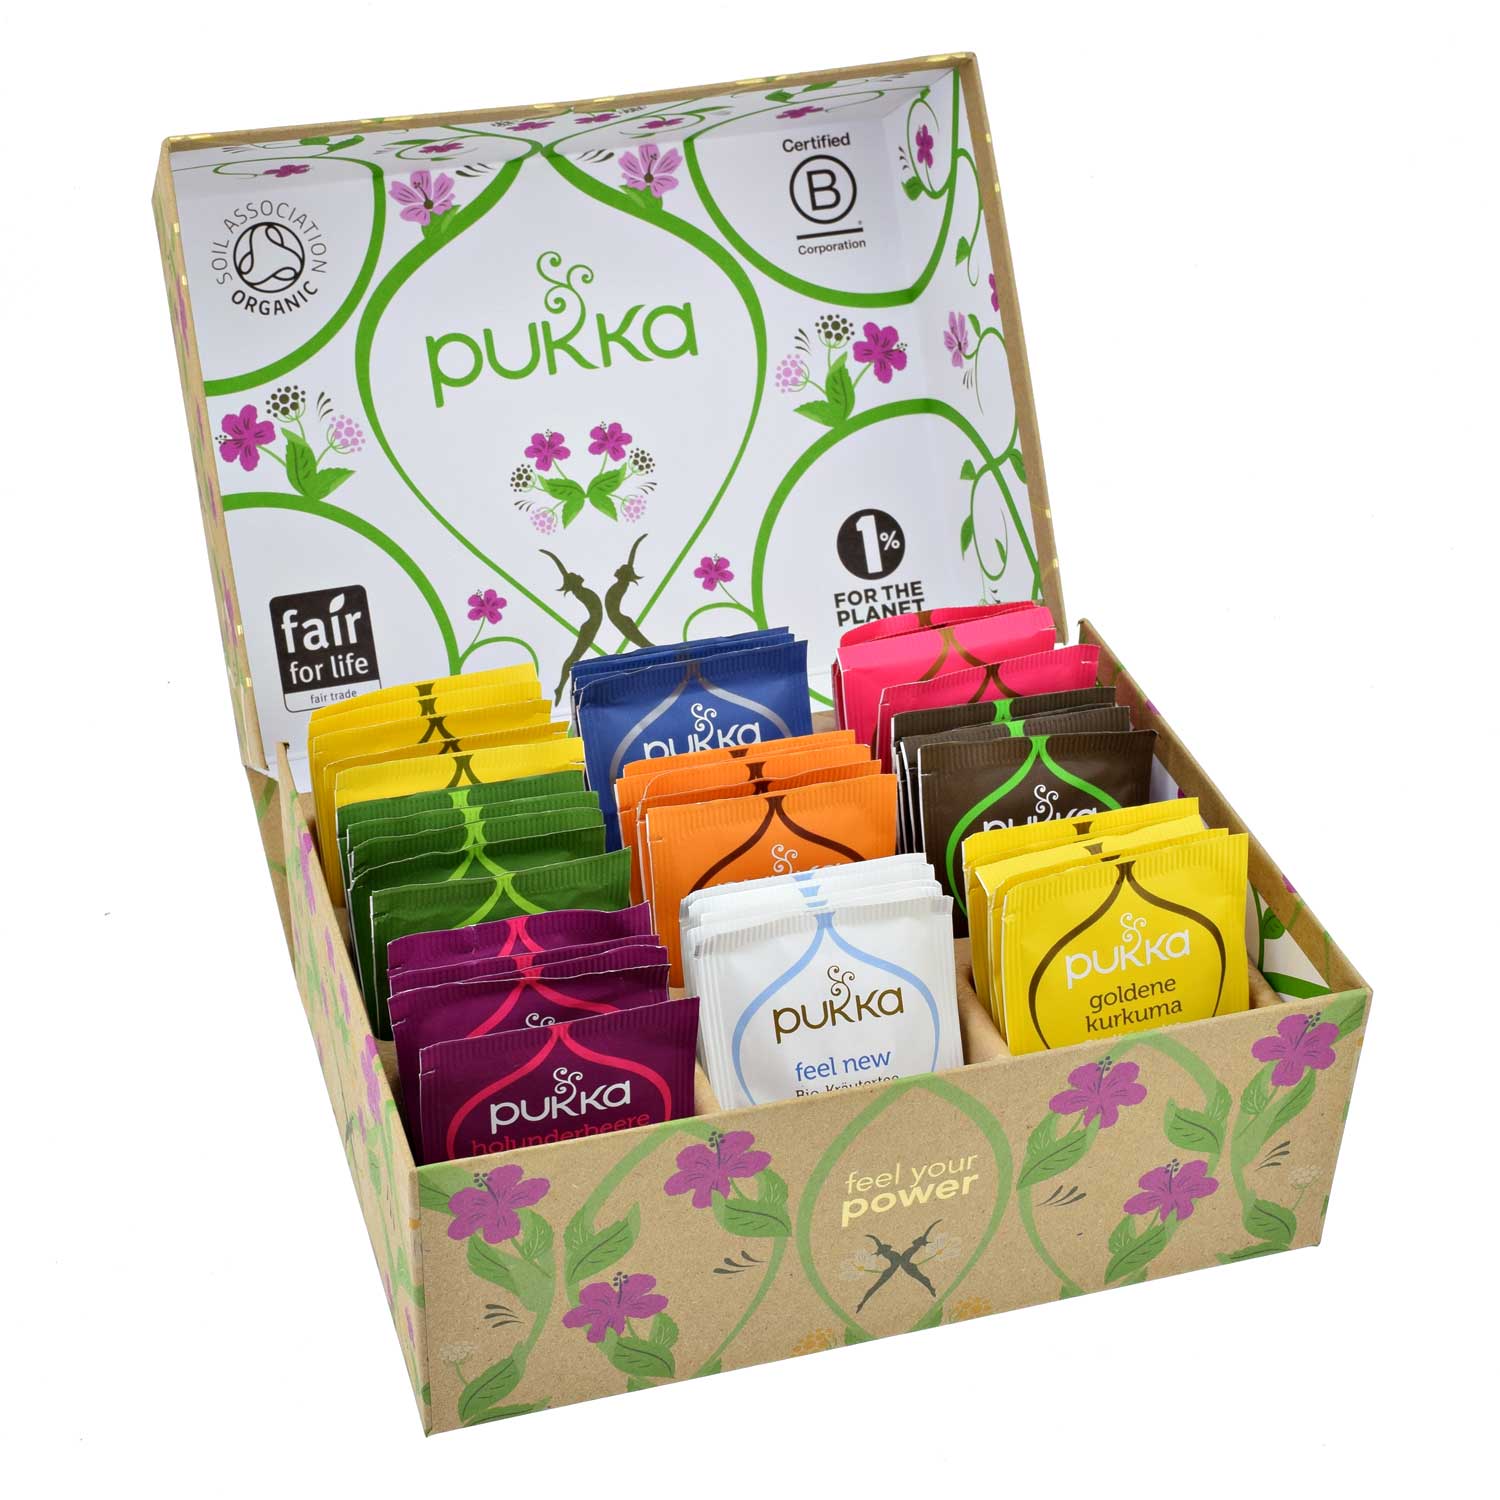 Pukka Selection Box